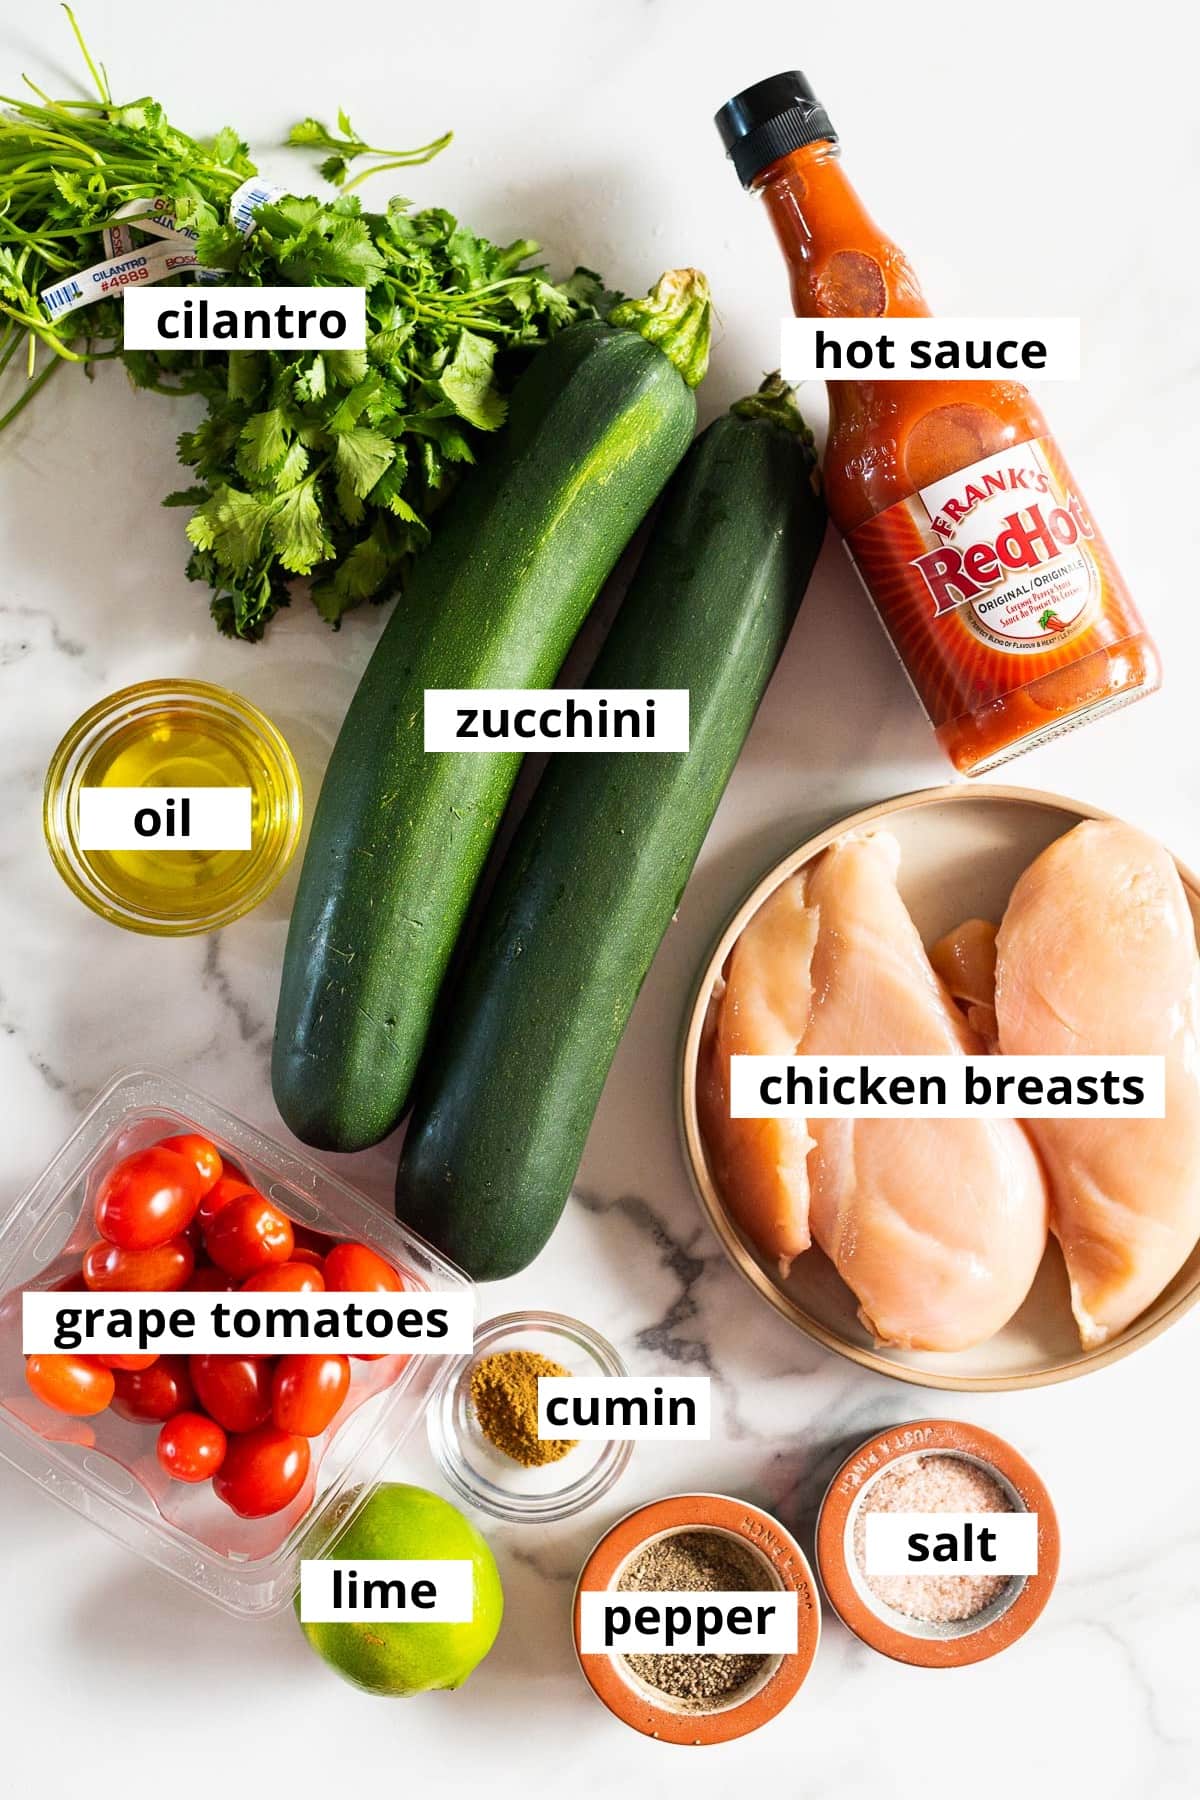 Zucchini, chicken breasts, hot sauce, oil, cilantro, grape tomatoes, lime, cumin, salt and pepper.